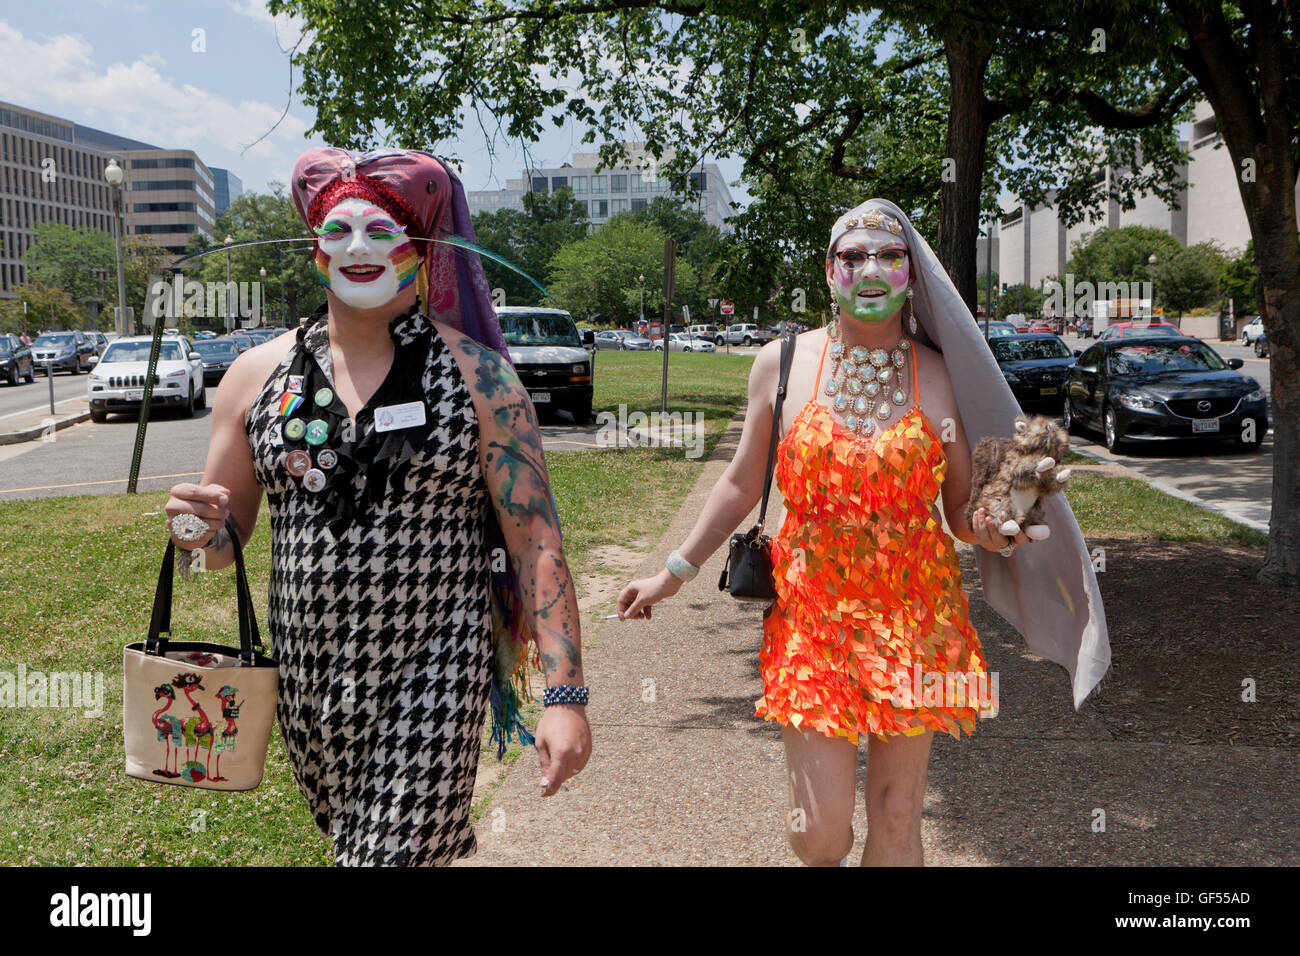 Drag queens at gay pride festival - Washington, DC USA Stock Photo